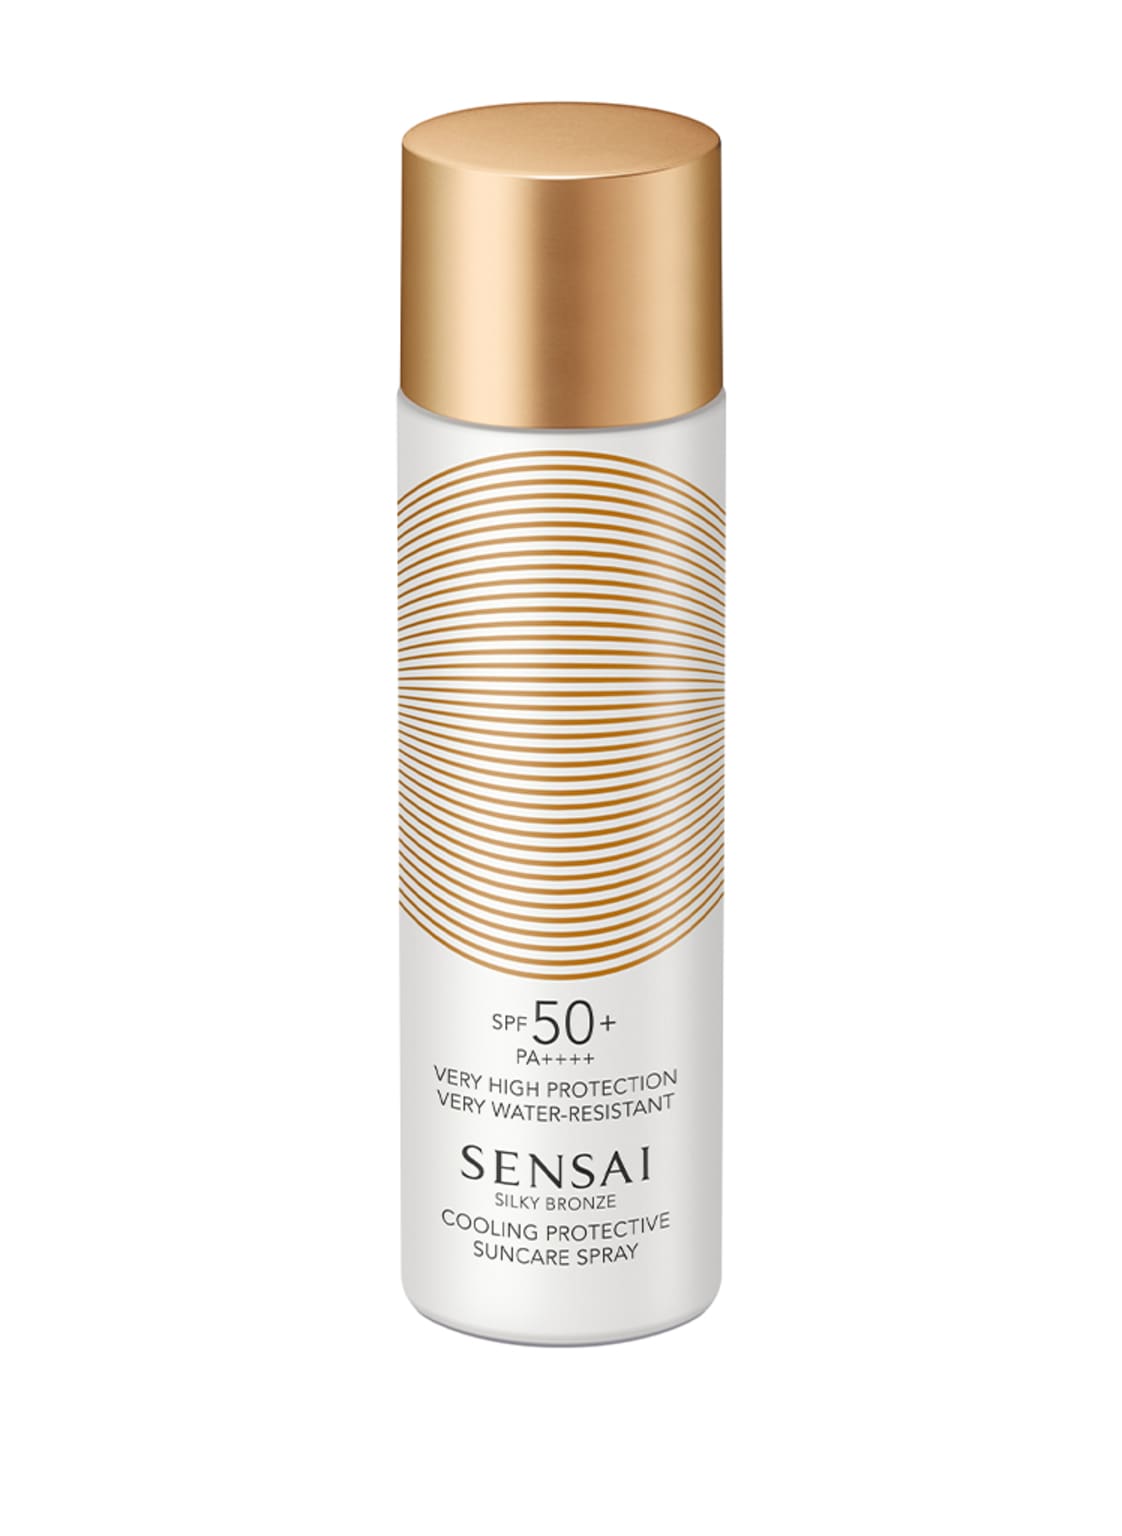 Sensai Silky Bronze – Cooling Protect Suncare Spray Spf 50